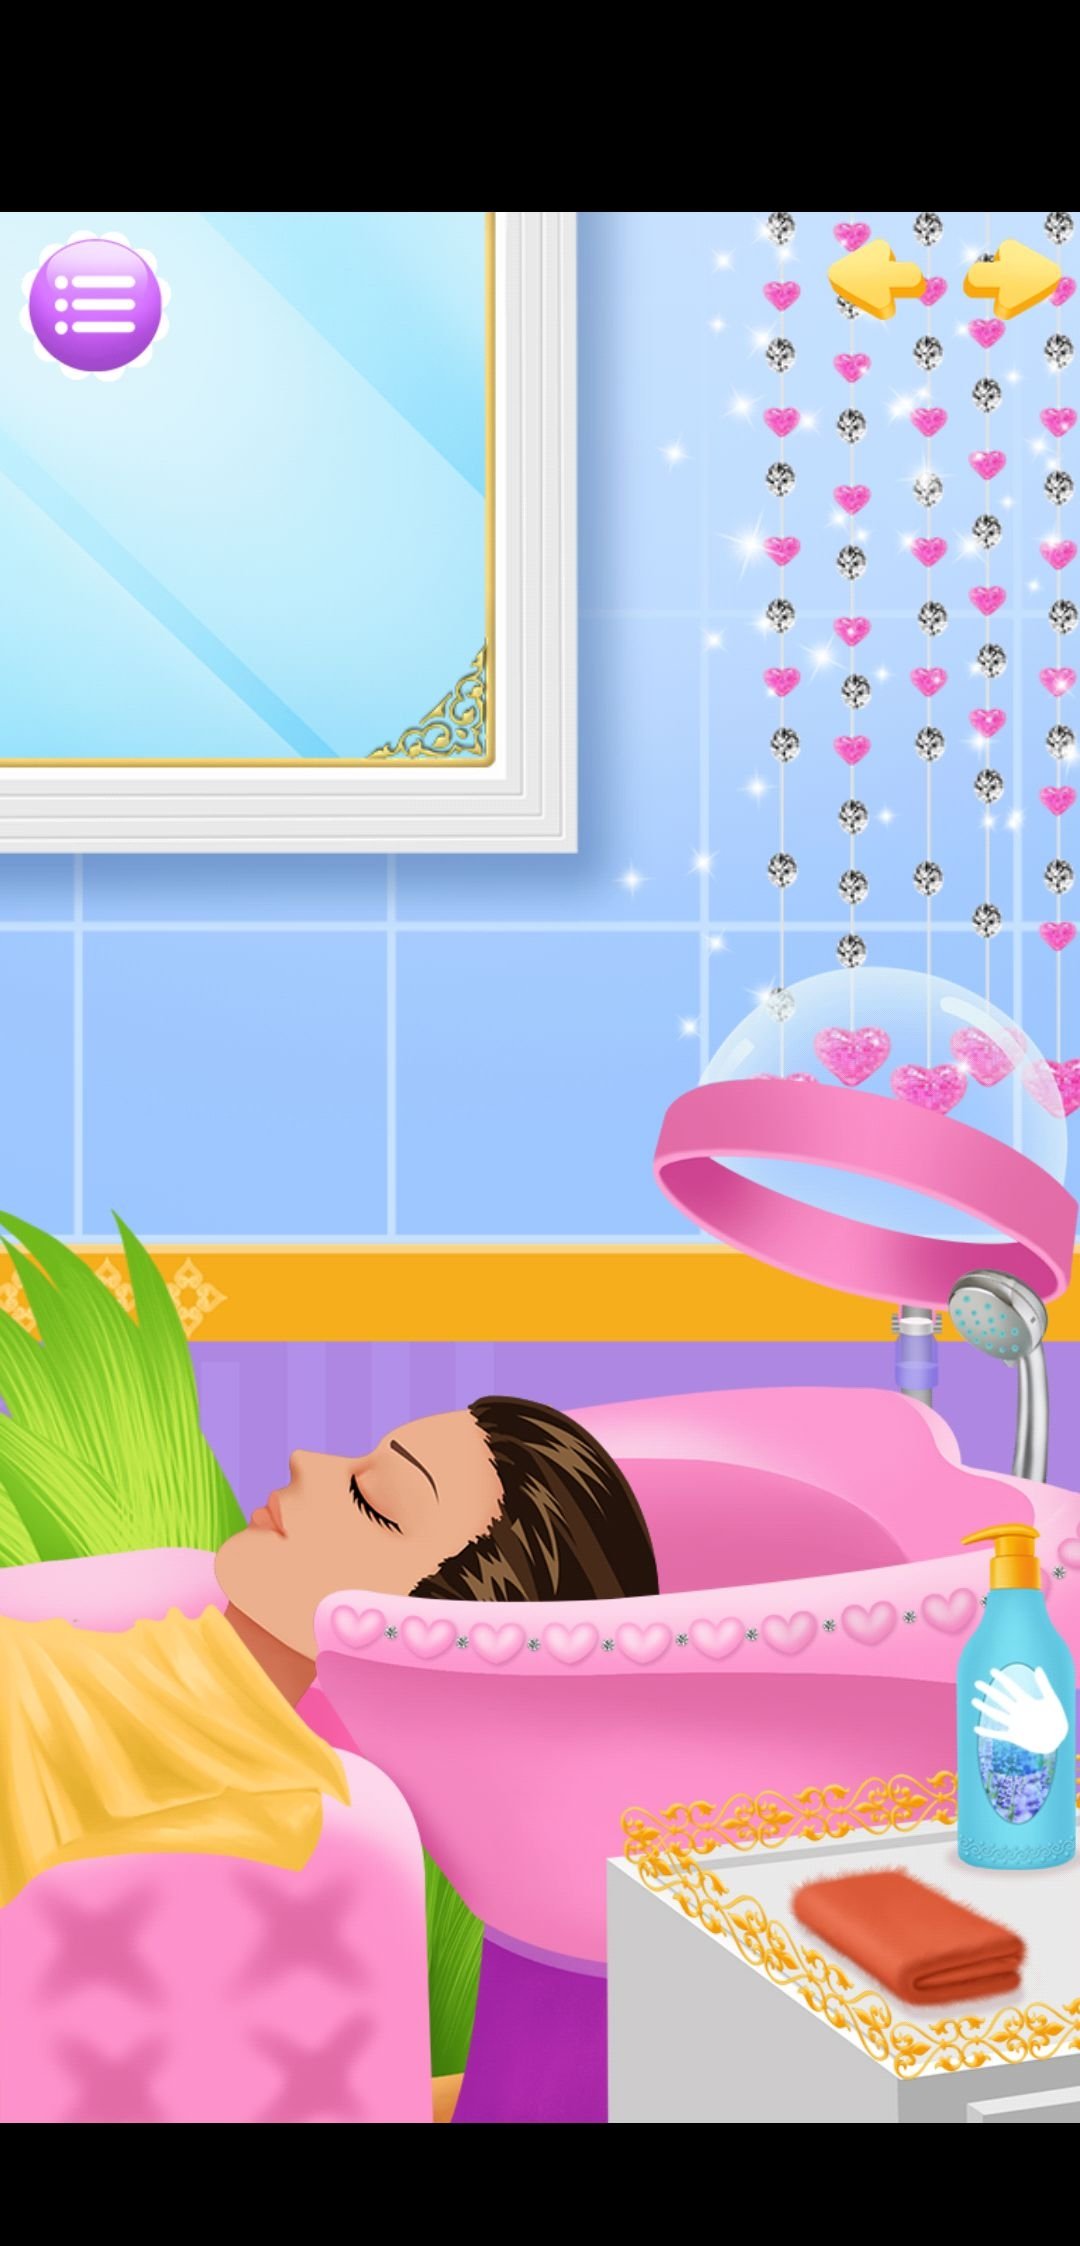 Princess Salon APK download - Princess Salon for Android Free